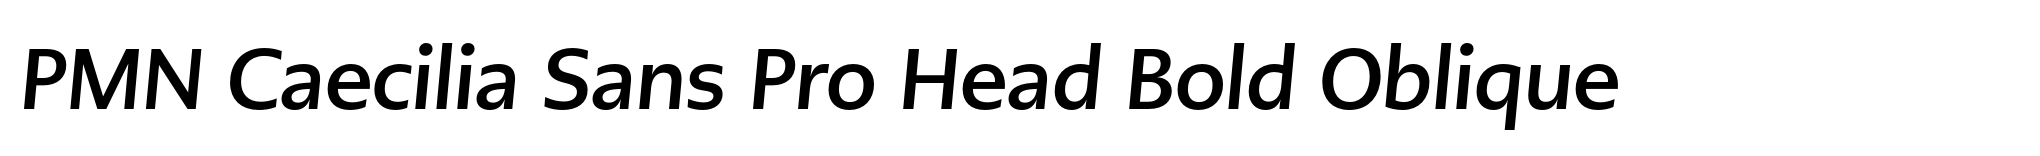 PMN Caecilia Sans Pro Head Bold Oblique image